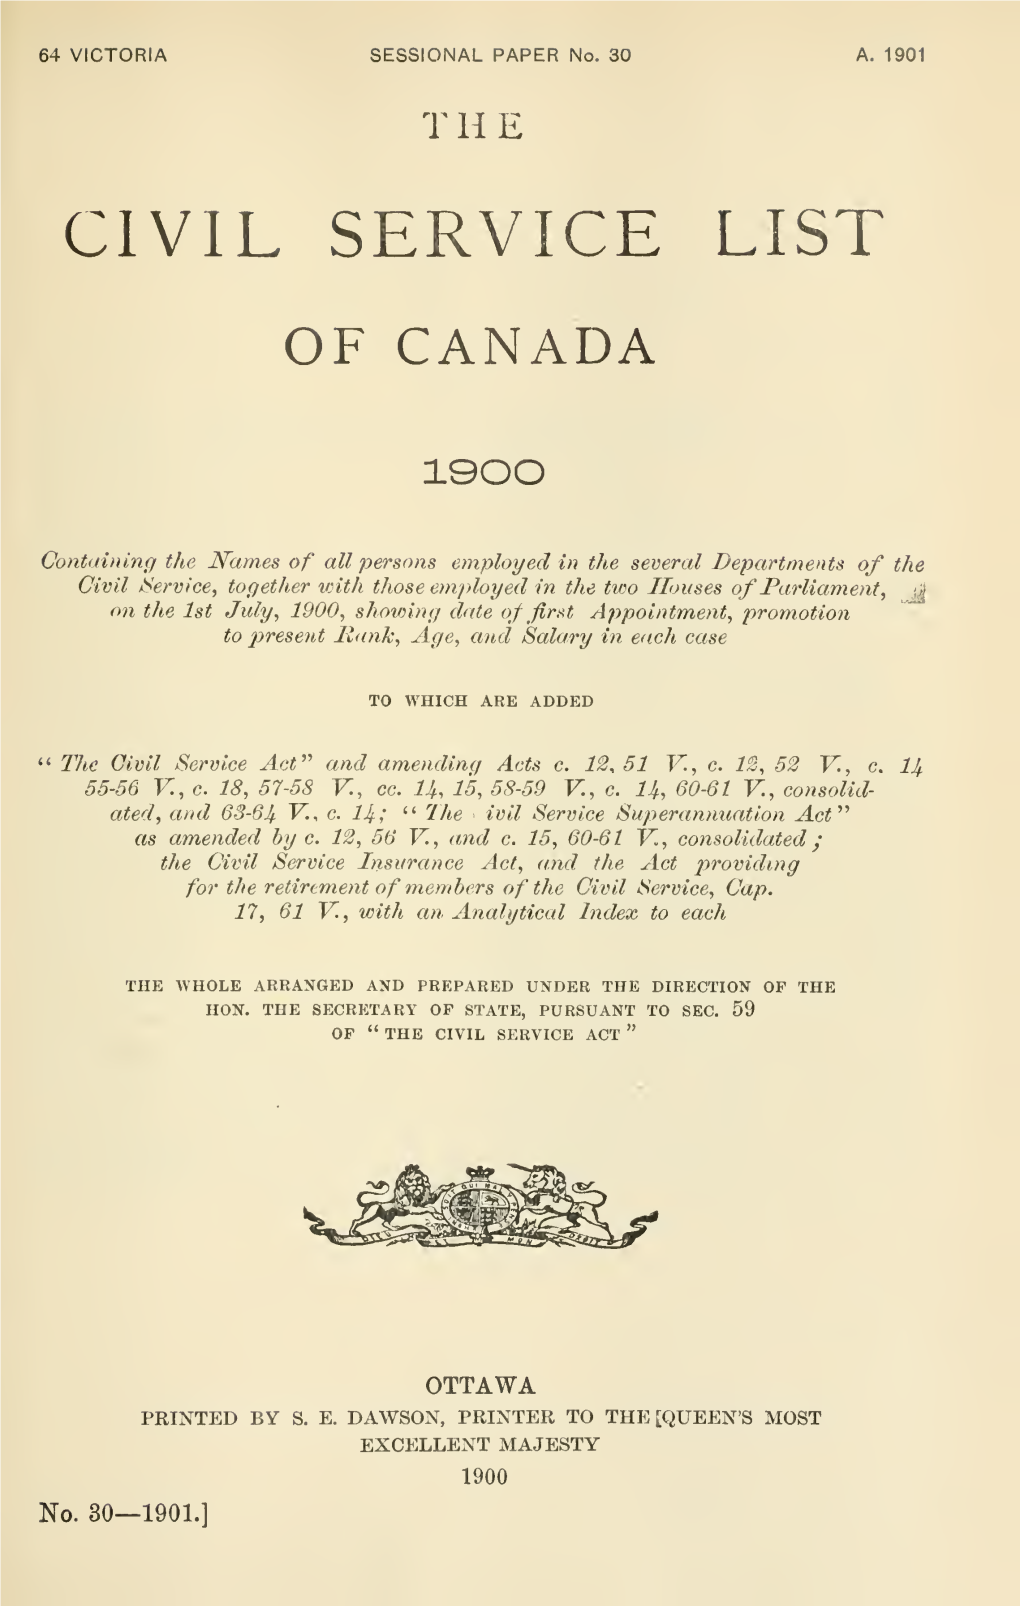 Civil Service List of Canada, 1900